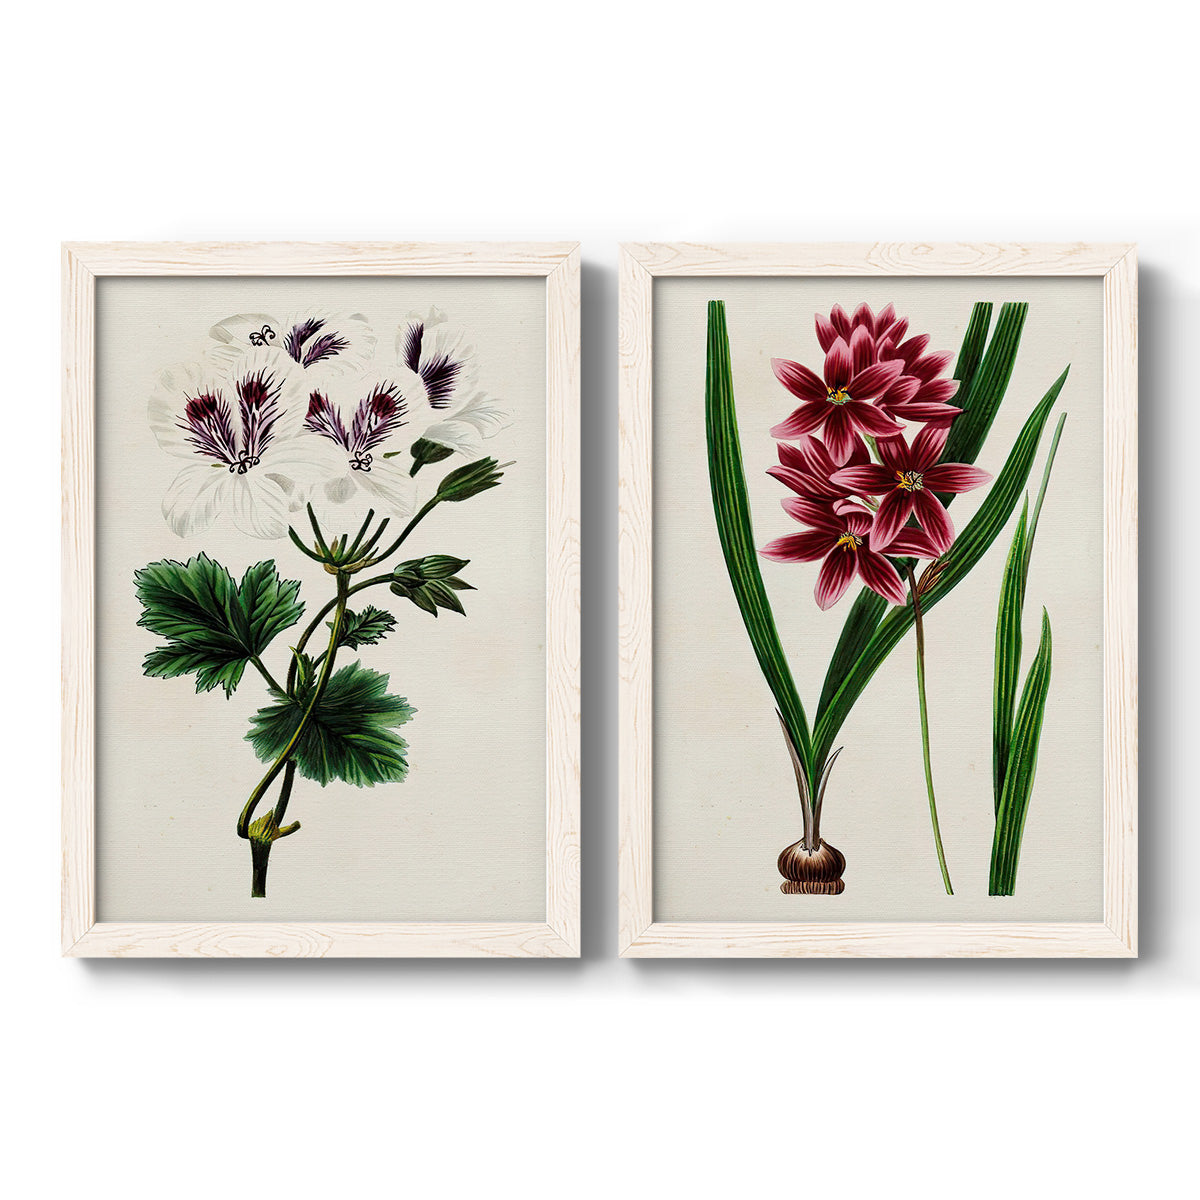 Antique Floral Folio IX - Premium Framed Canvas 2 Piece Set - Ready to Hang